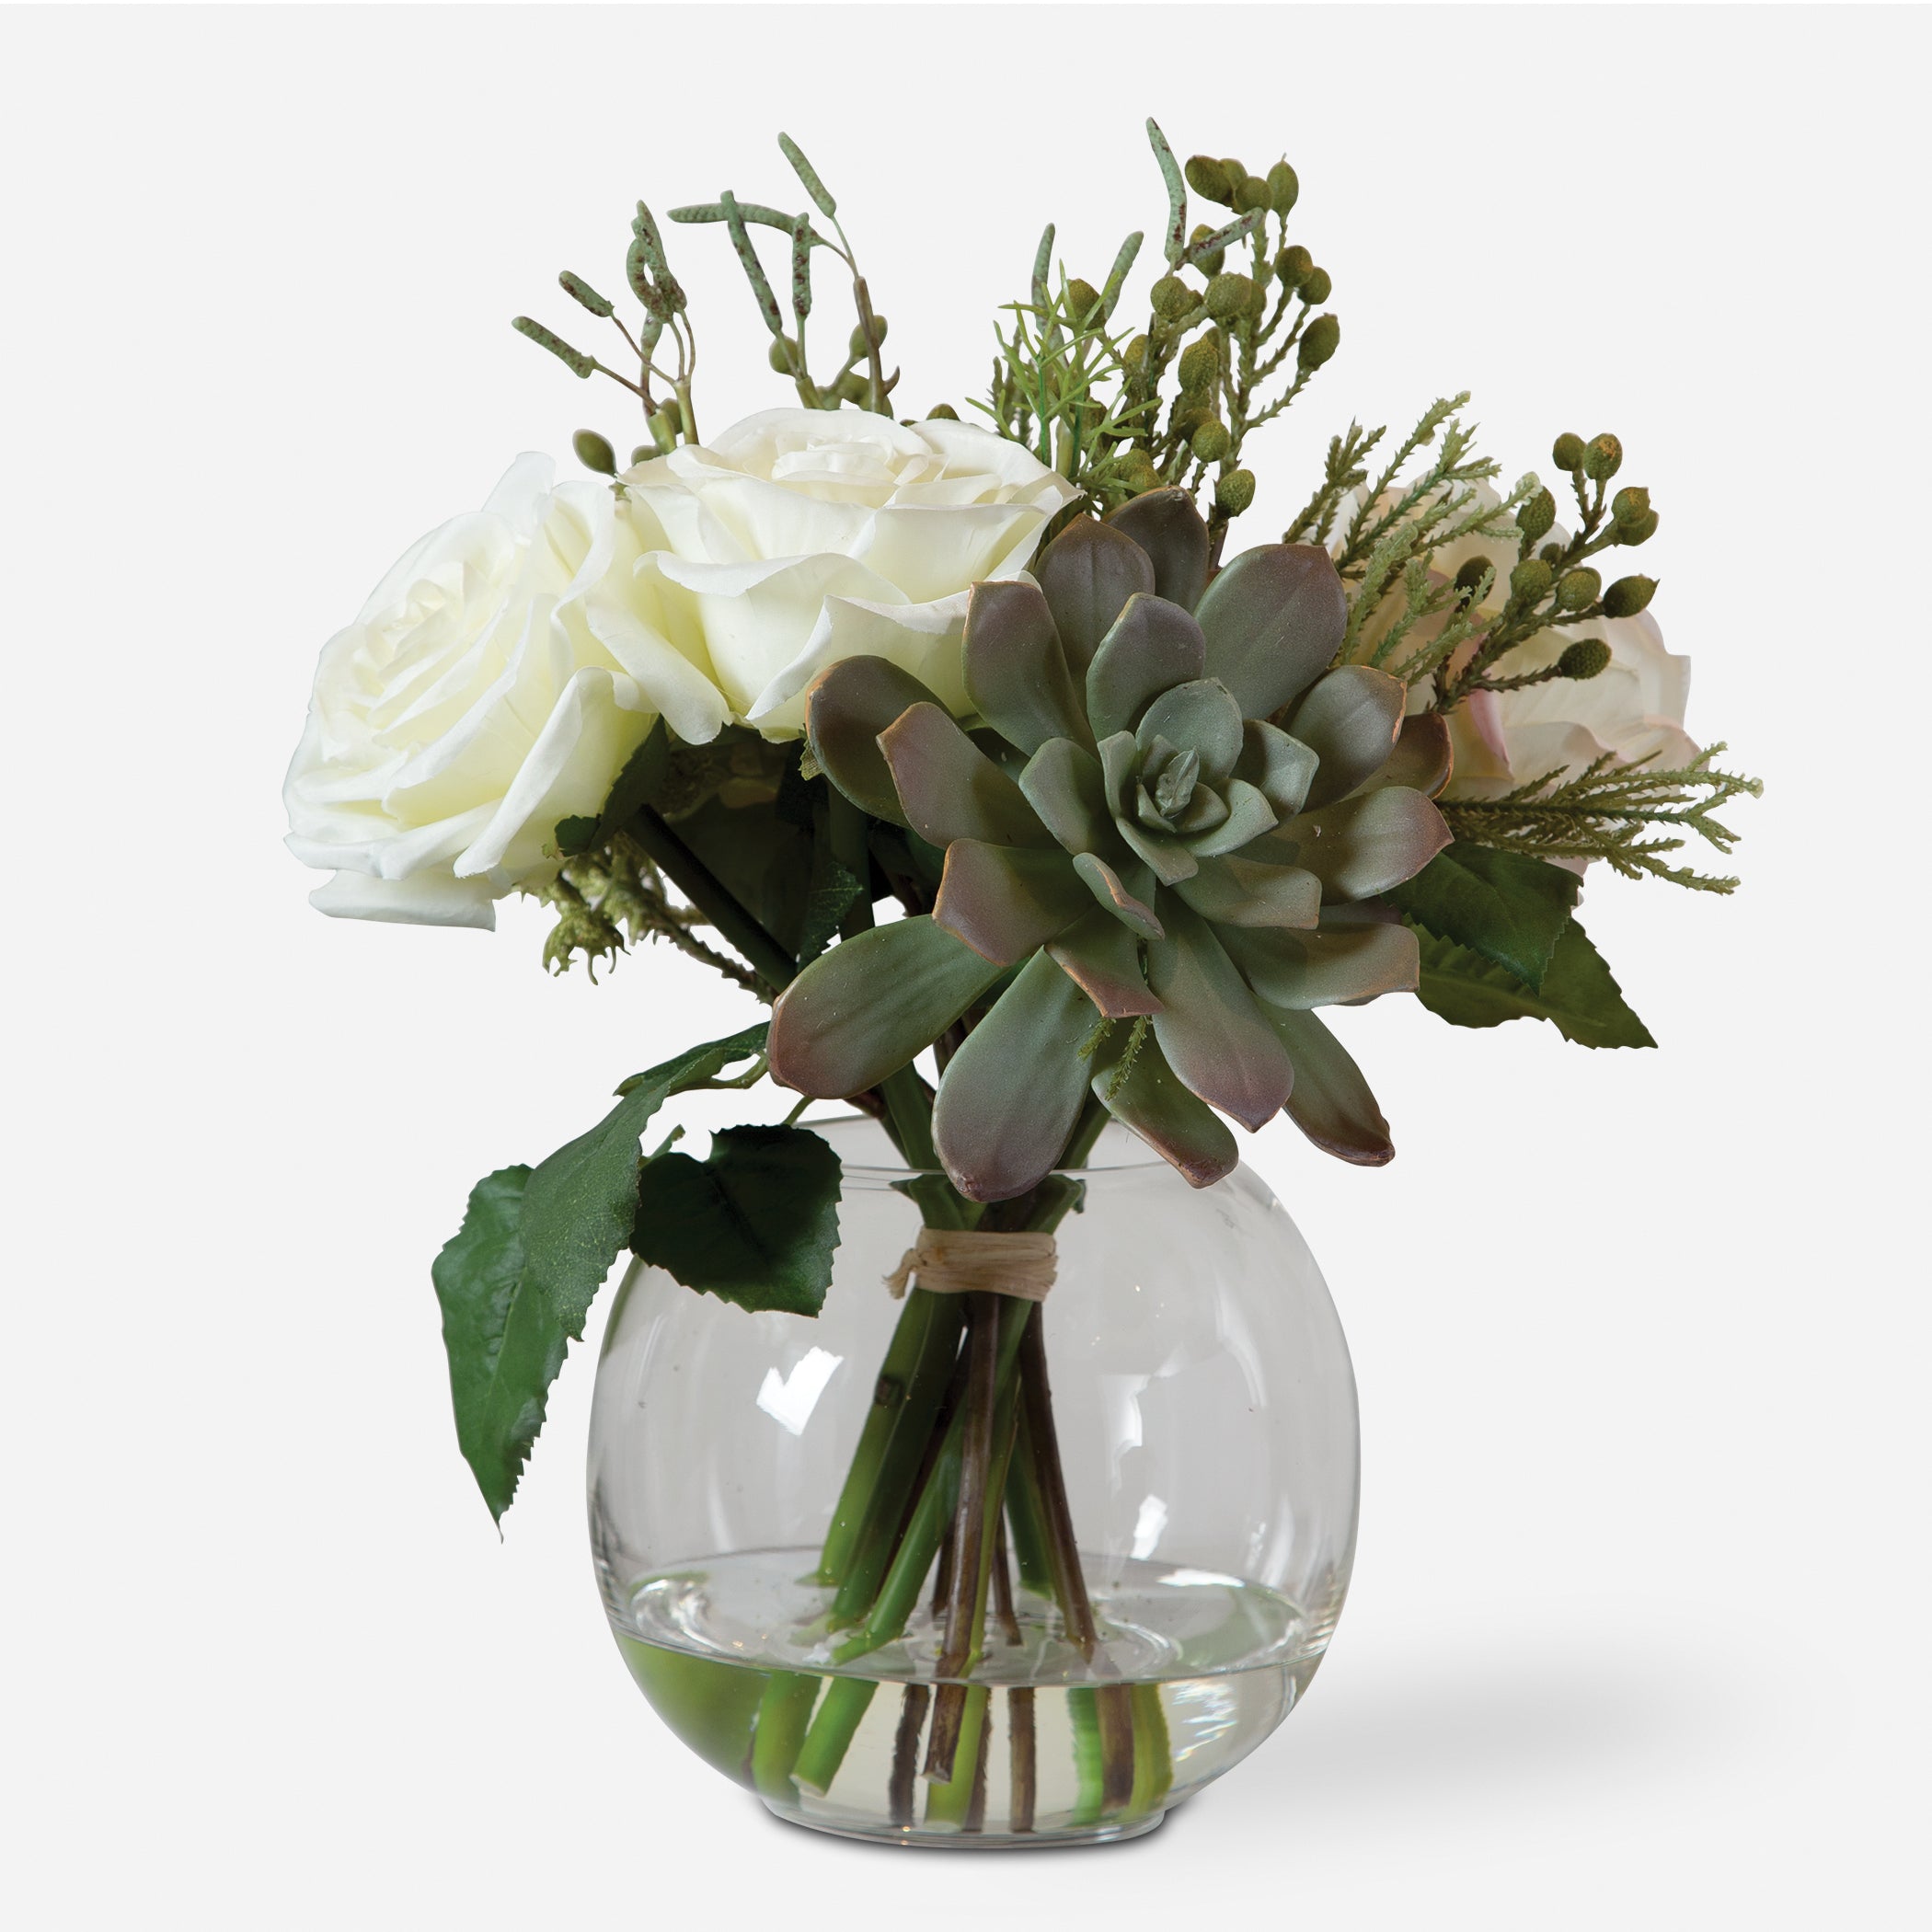 Uttermost Belmonte Artificial Flowers / Centerpiece